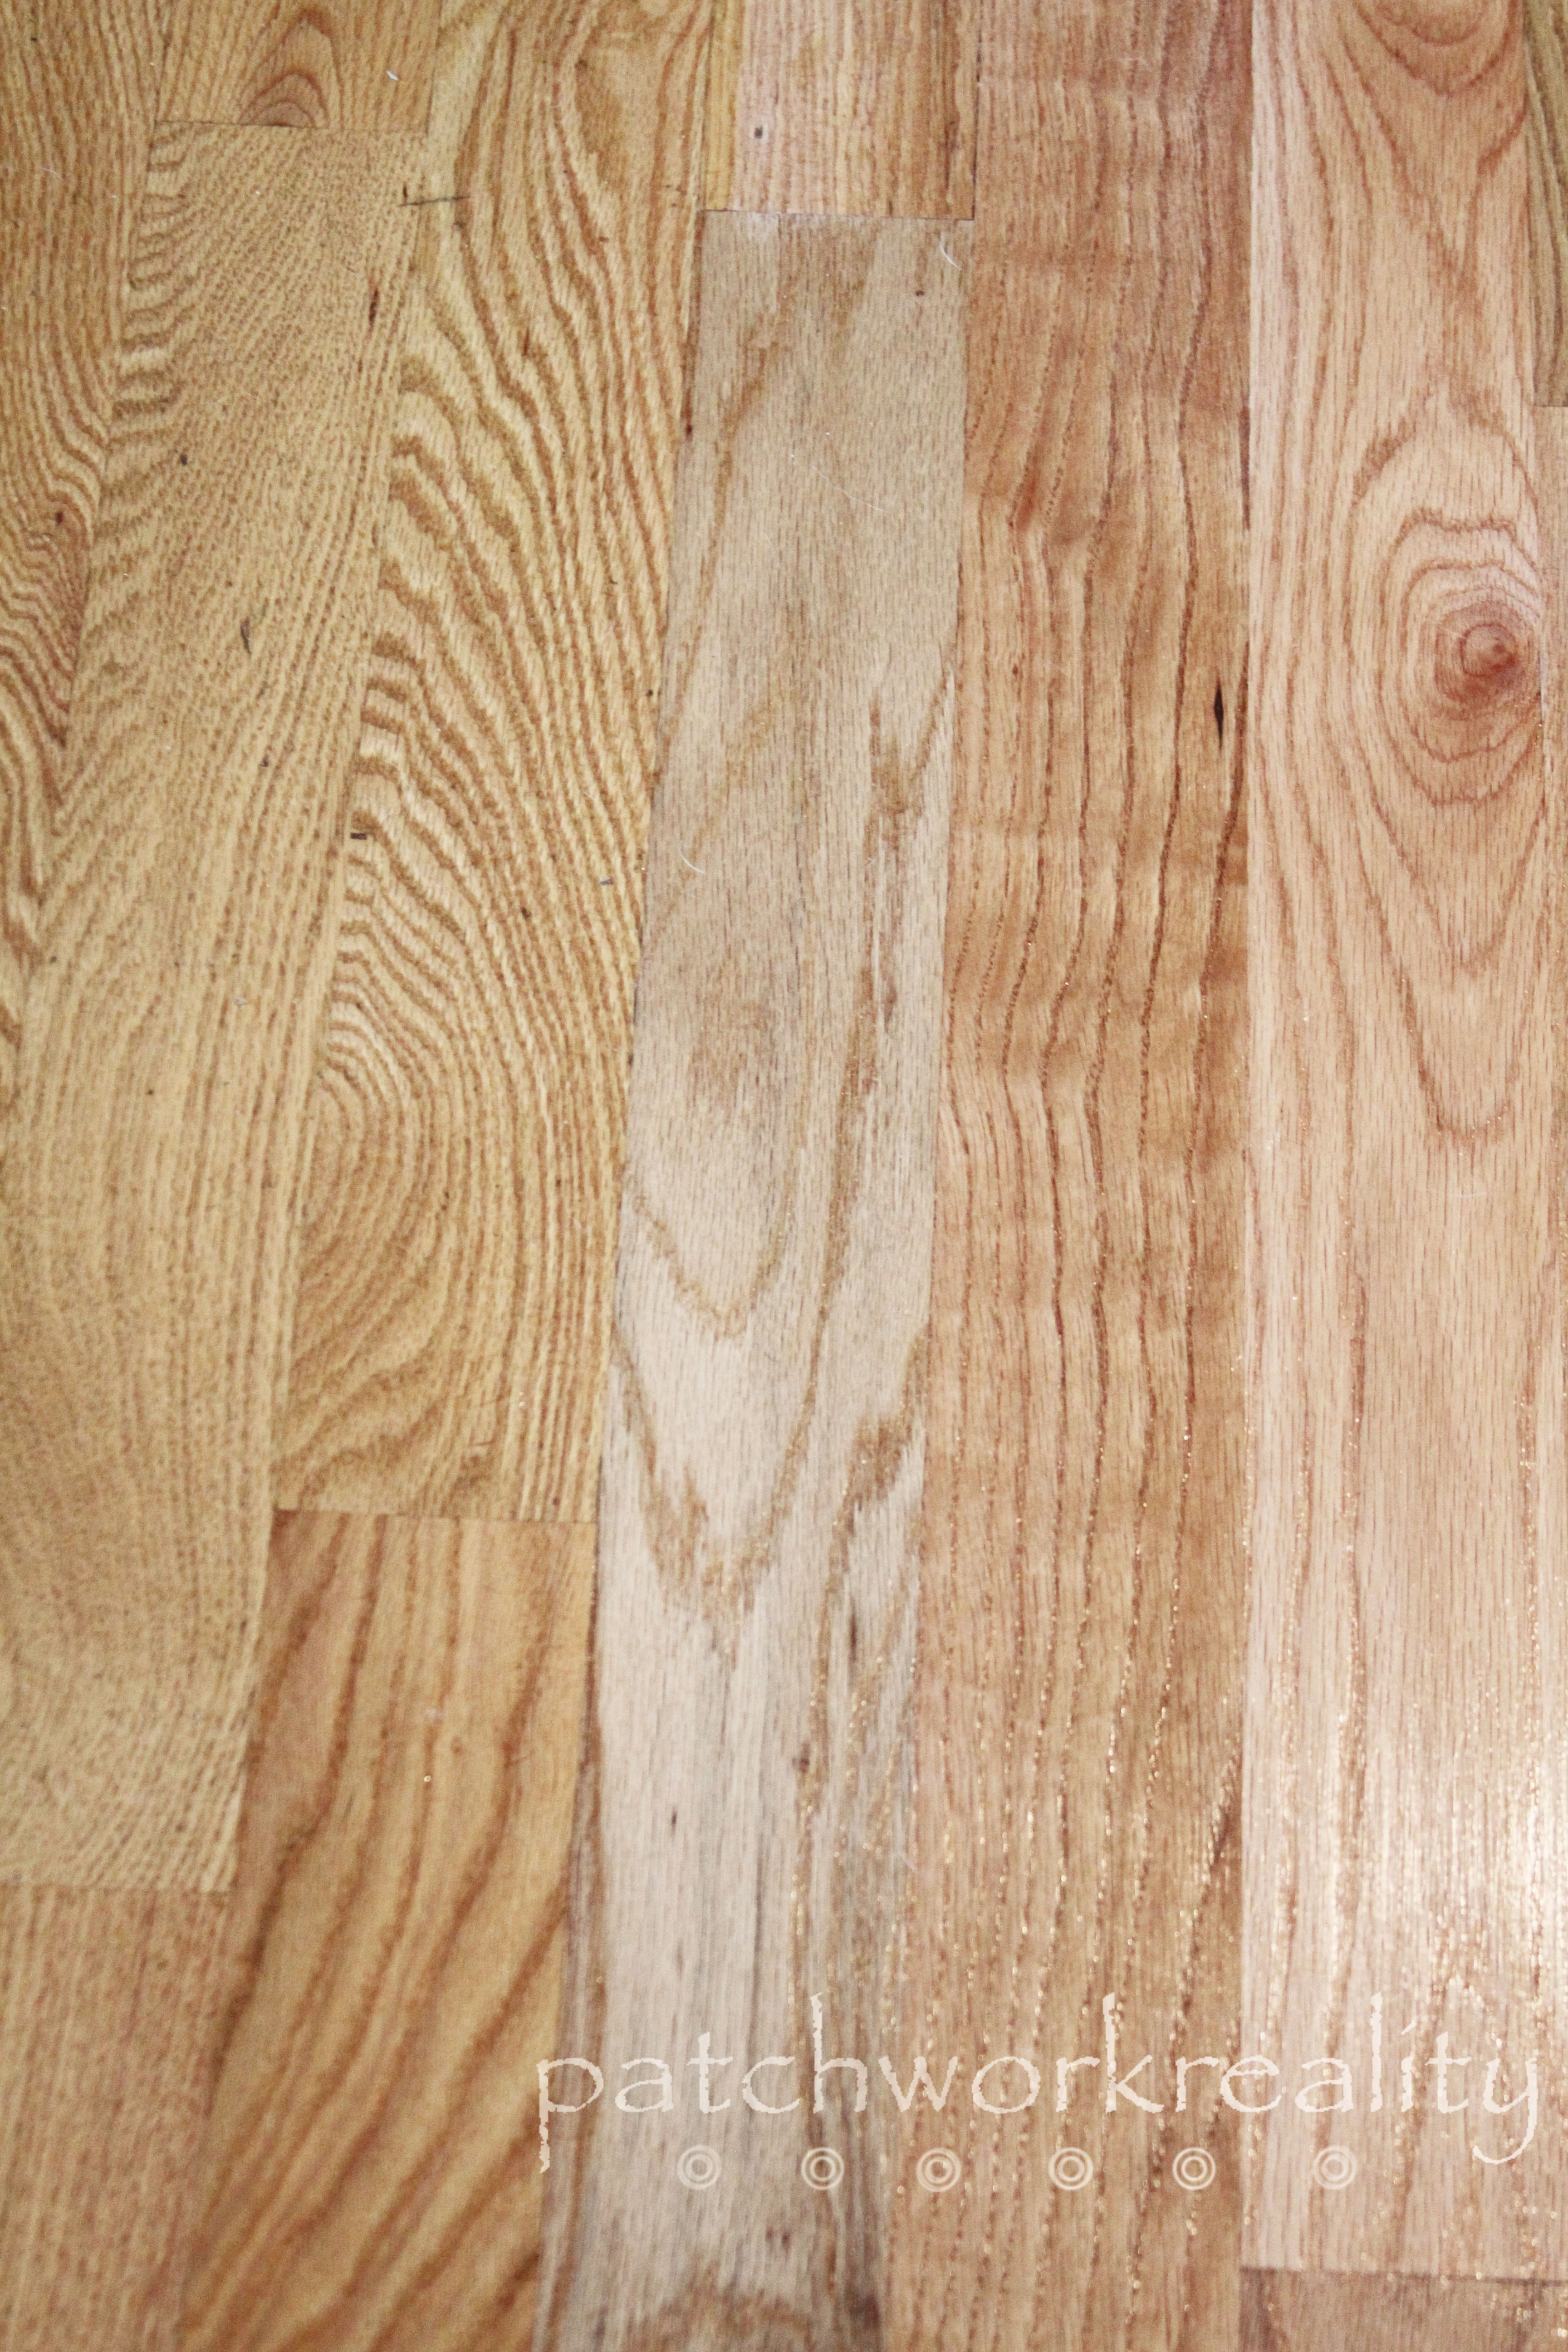 Porta Nailer Hardwood Floor Nailer Of Hardwood Patchwork Reality Regarding Oak Flooring